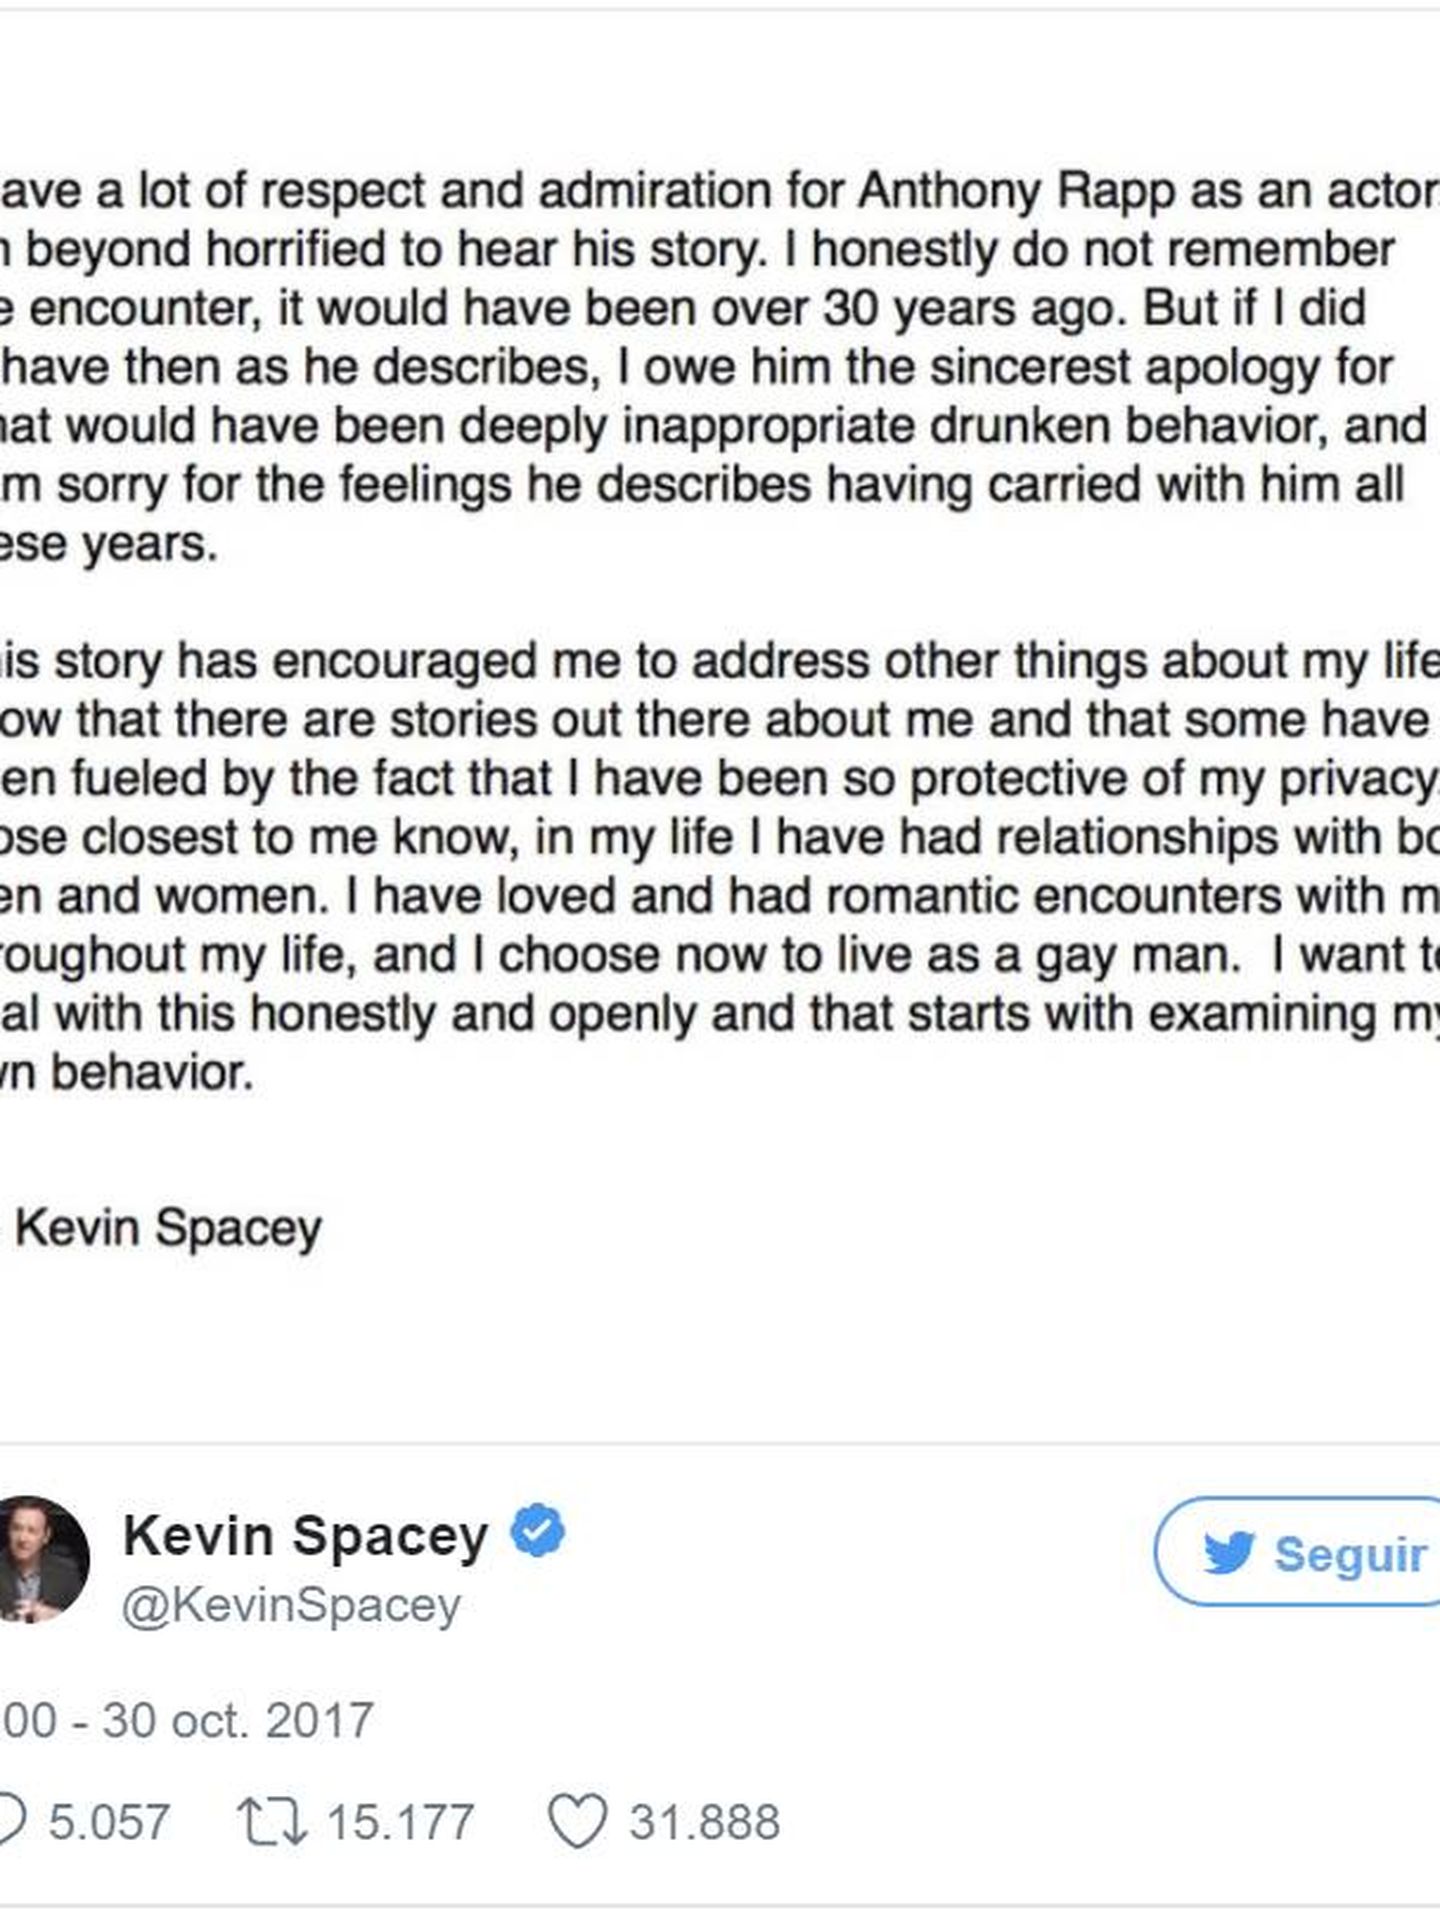 Tweet compartido por Kevin Spacey a modo de comunicado oficial.